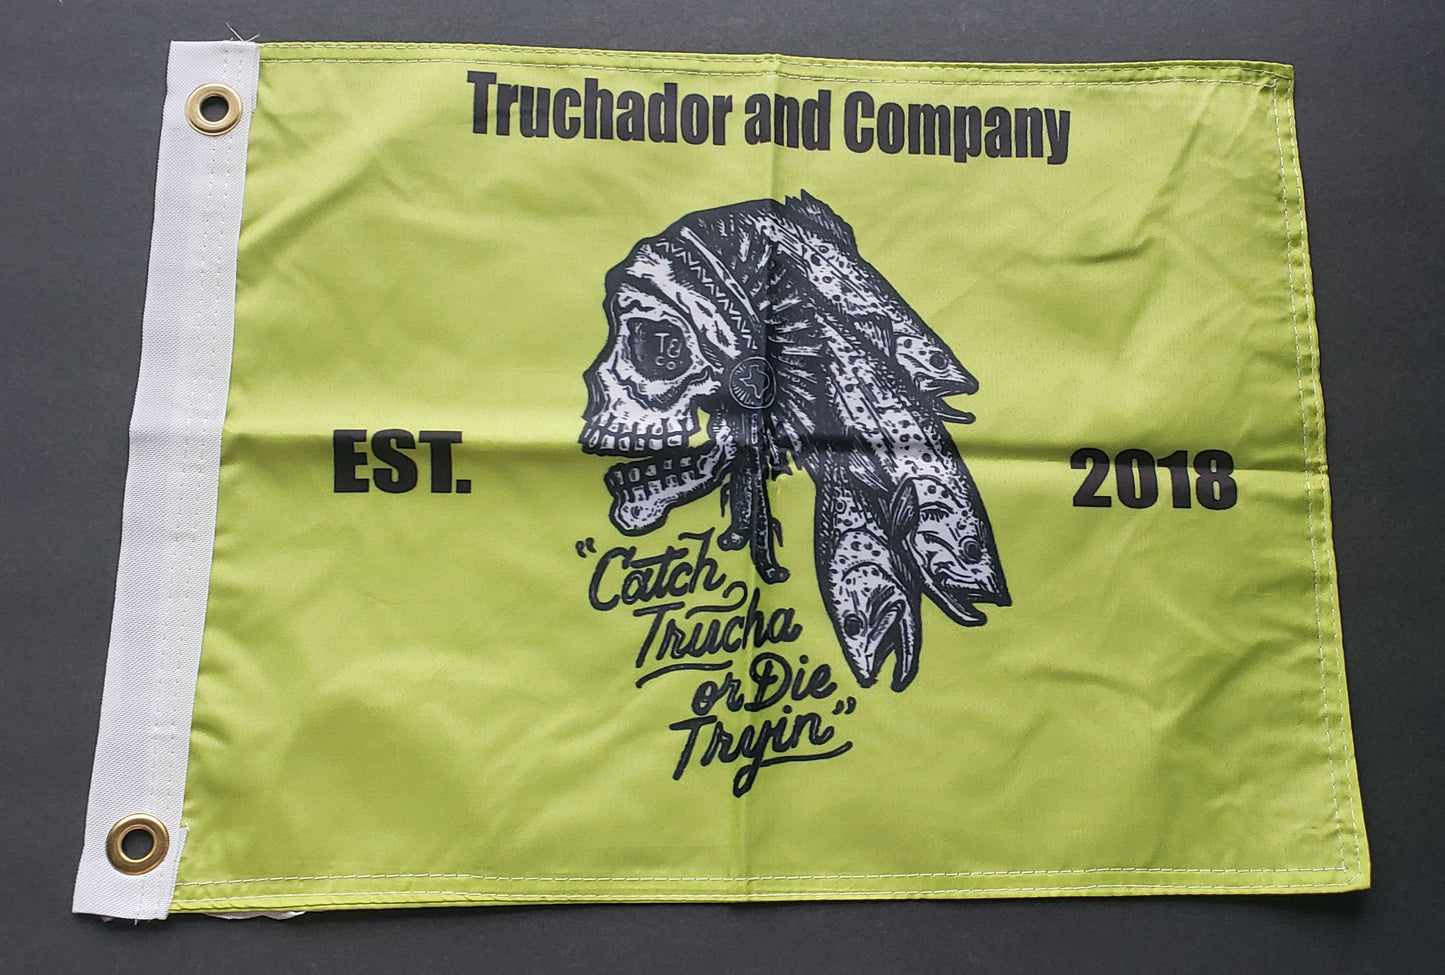 Catch Trucha Flag